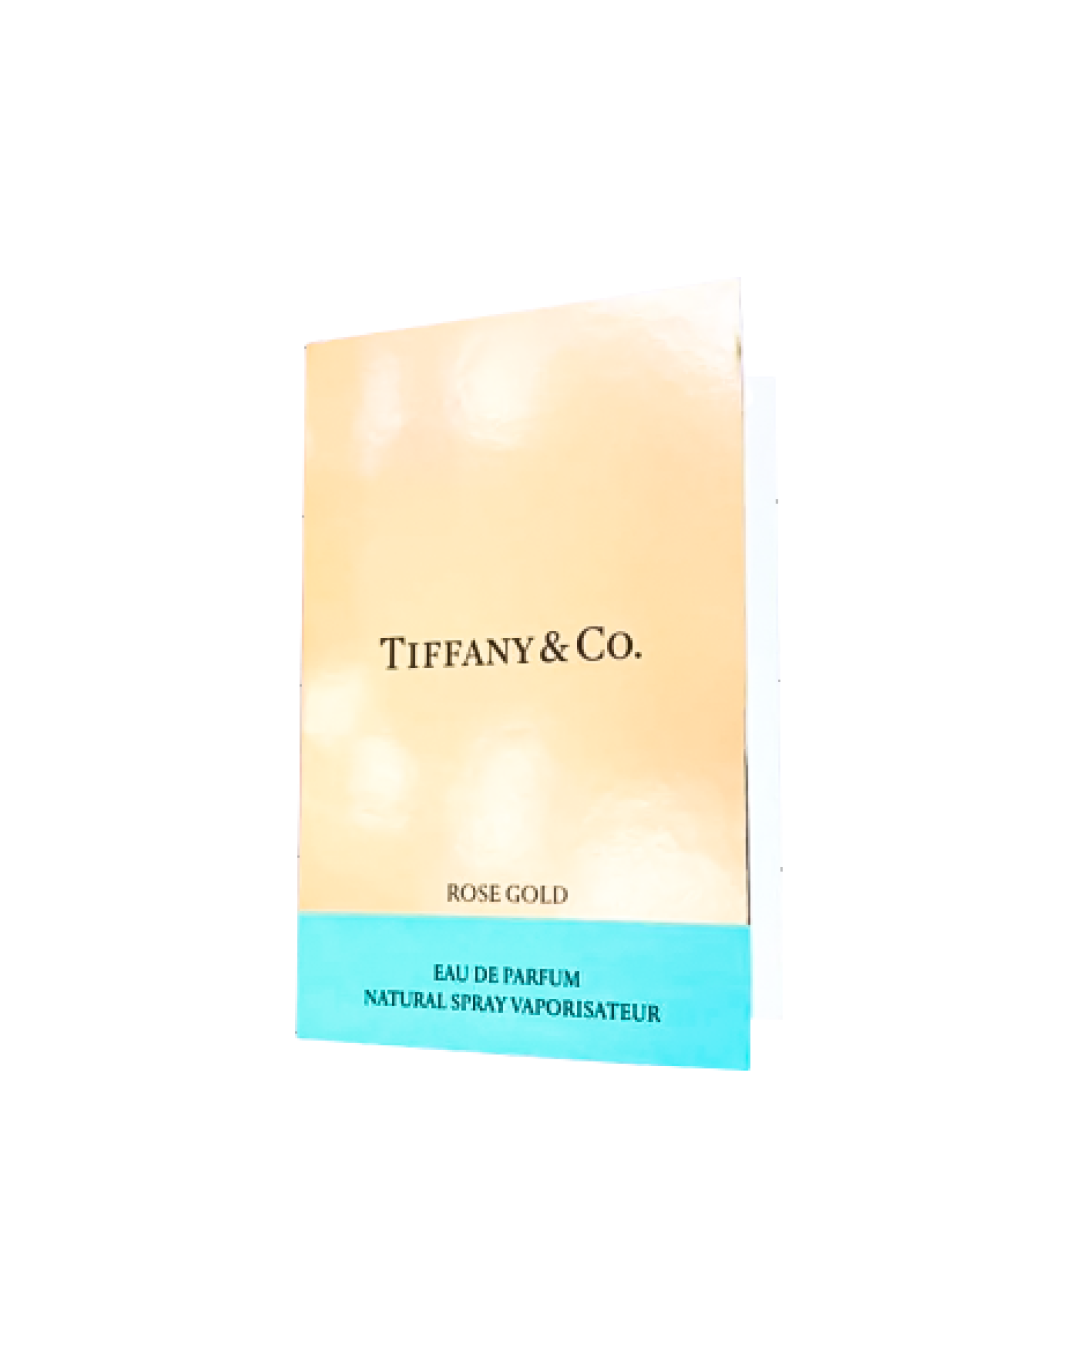 Tiffany & Co. Tiffany & Co. Rose Gold EDP Travel Vial (1.2ml) - Best Buy World Philippines